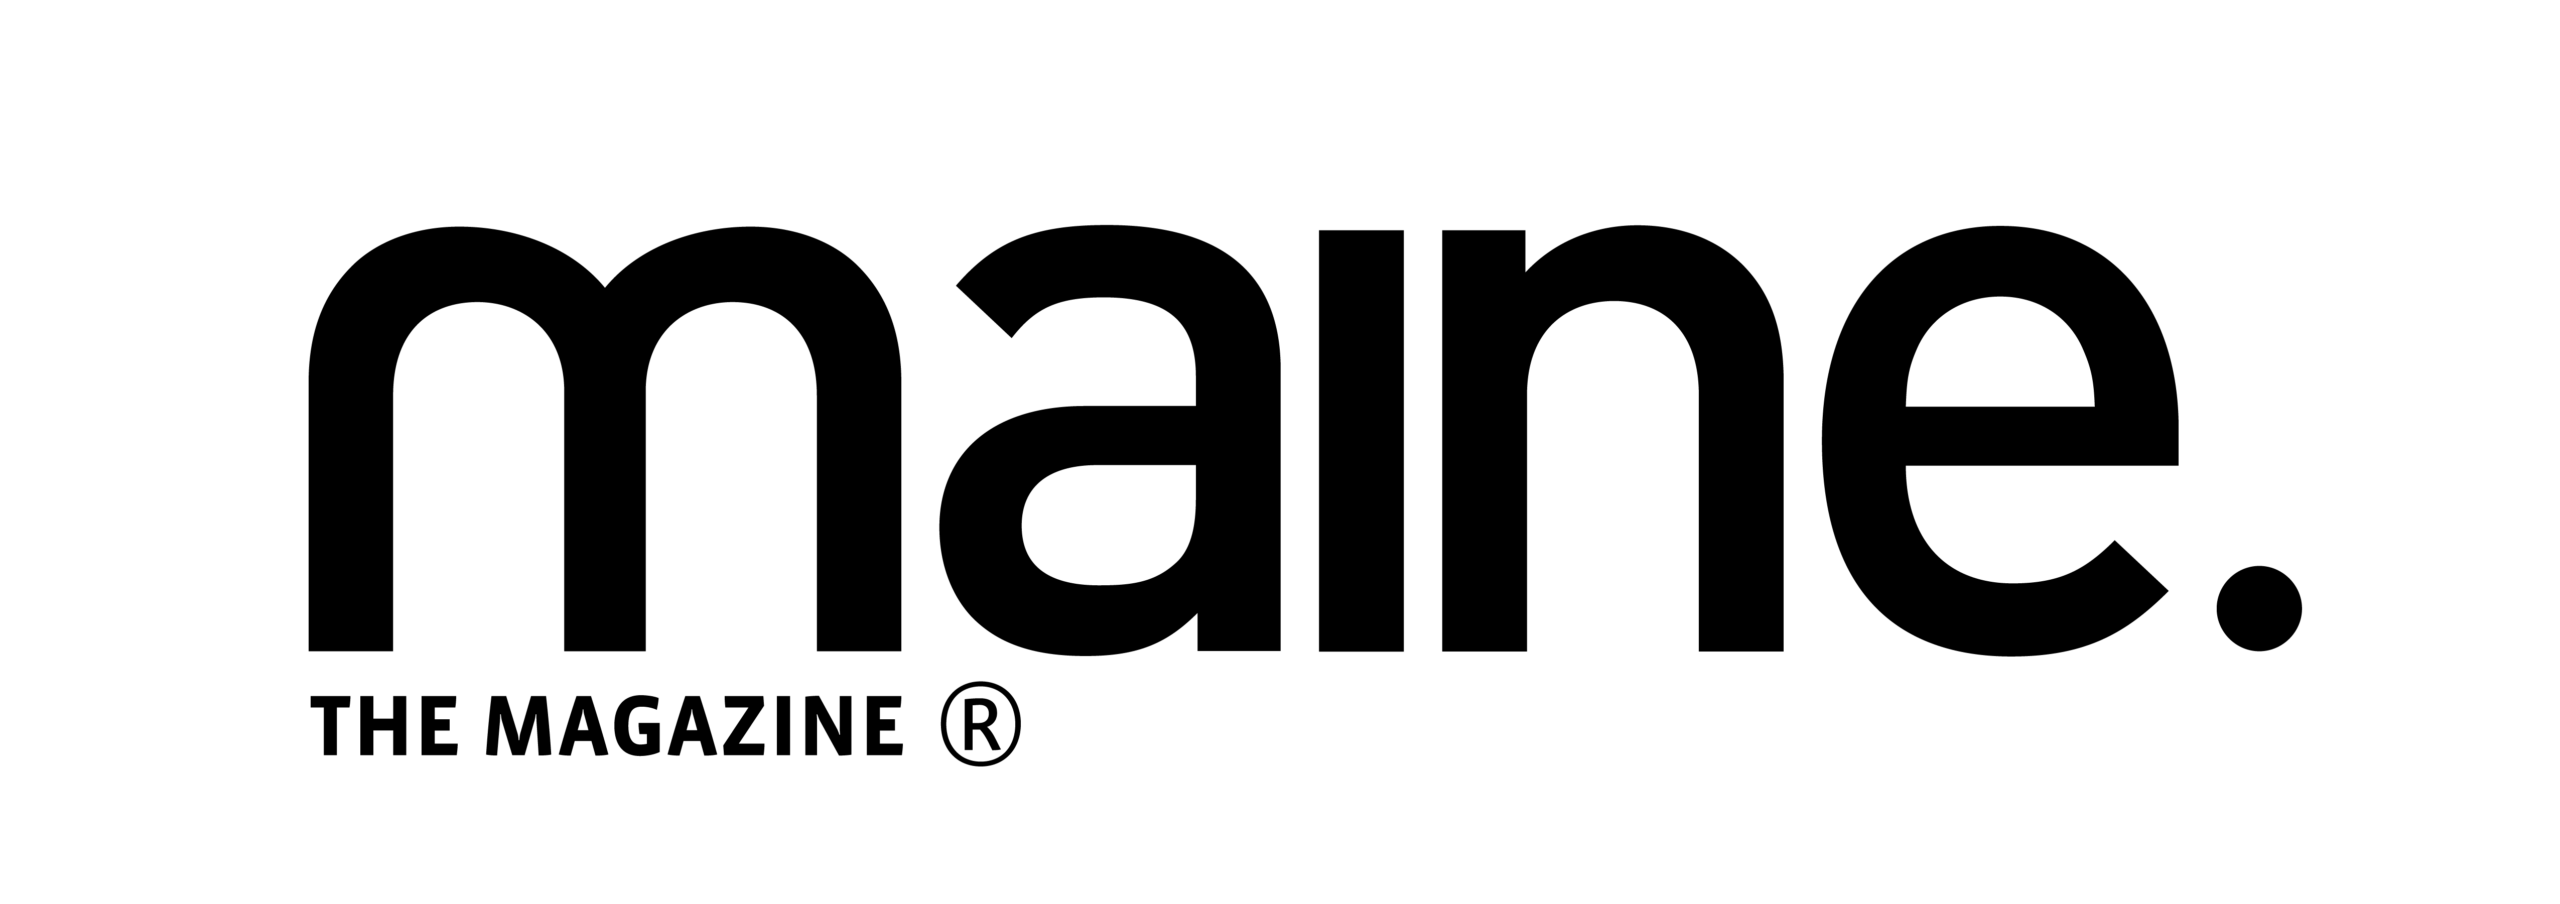 maine-the-mag-logo